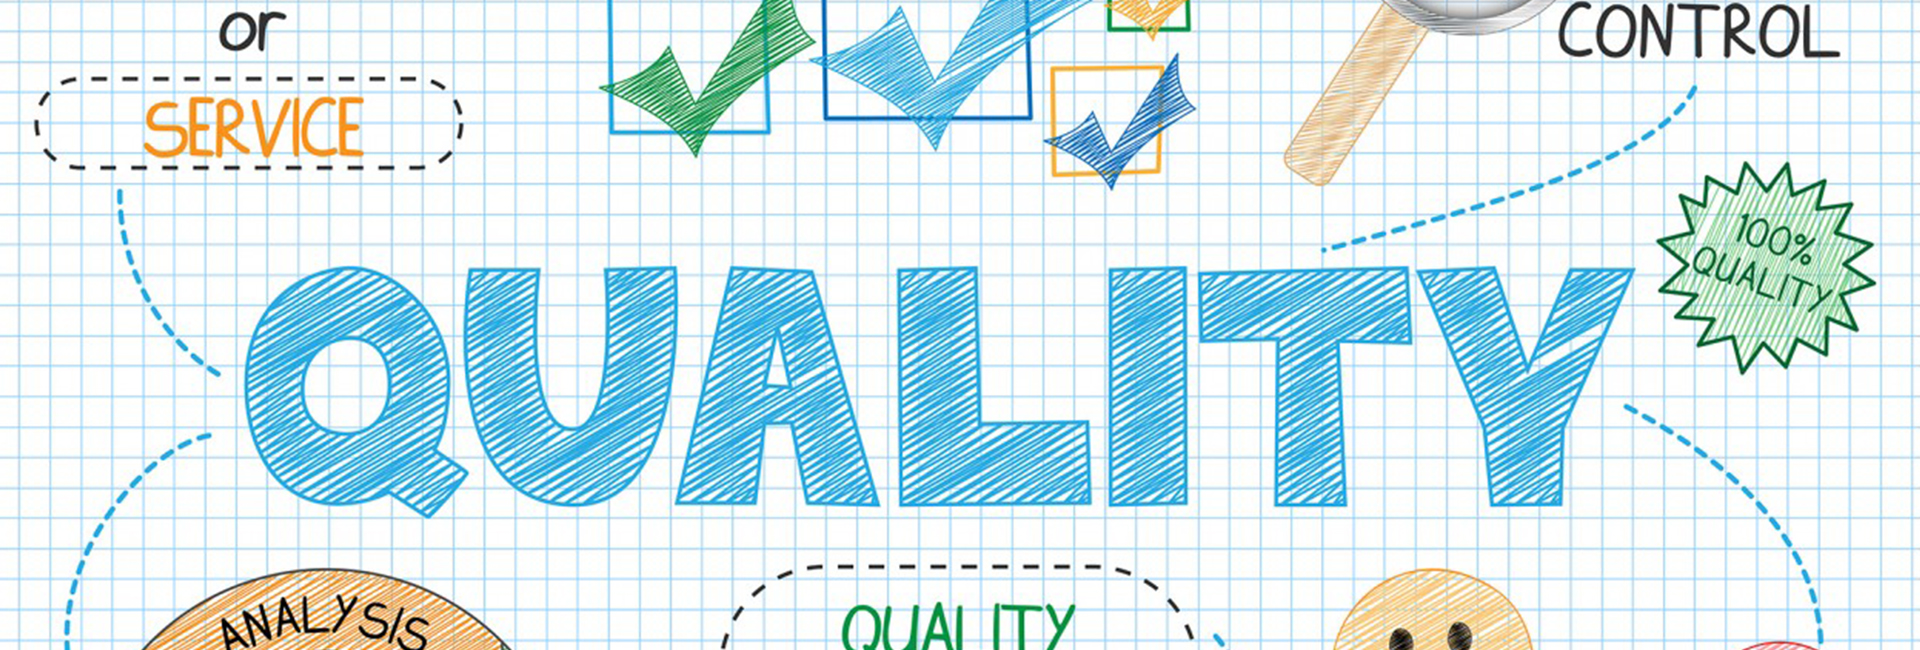 Quality Control Management Software